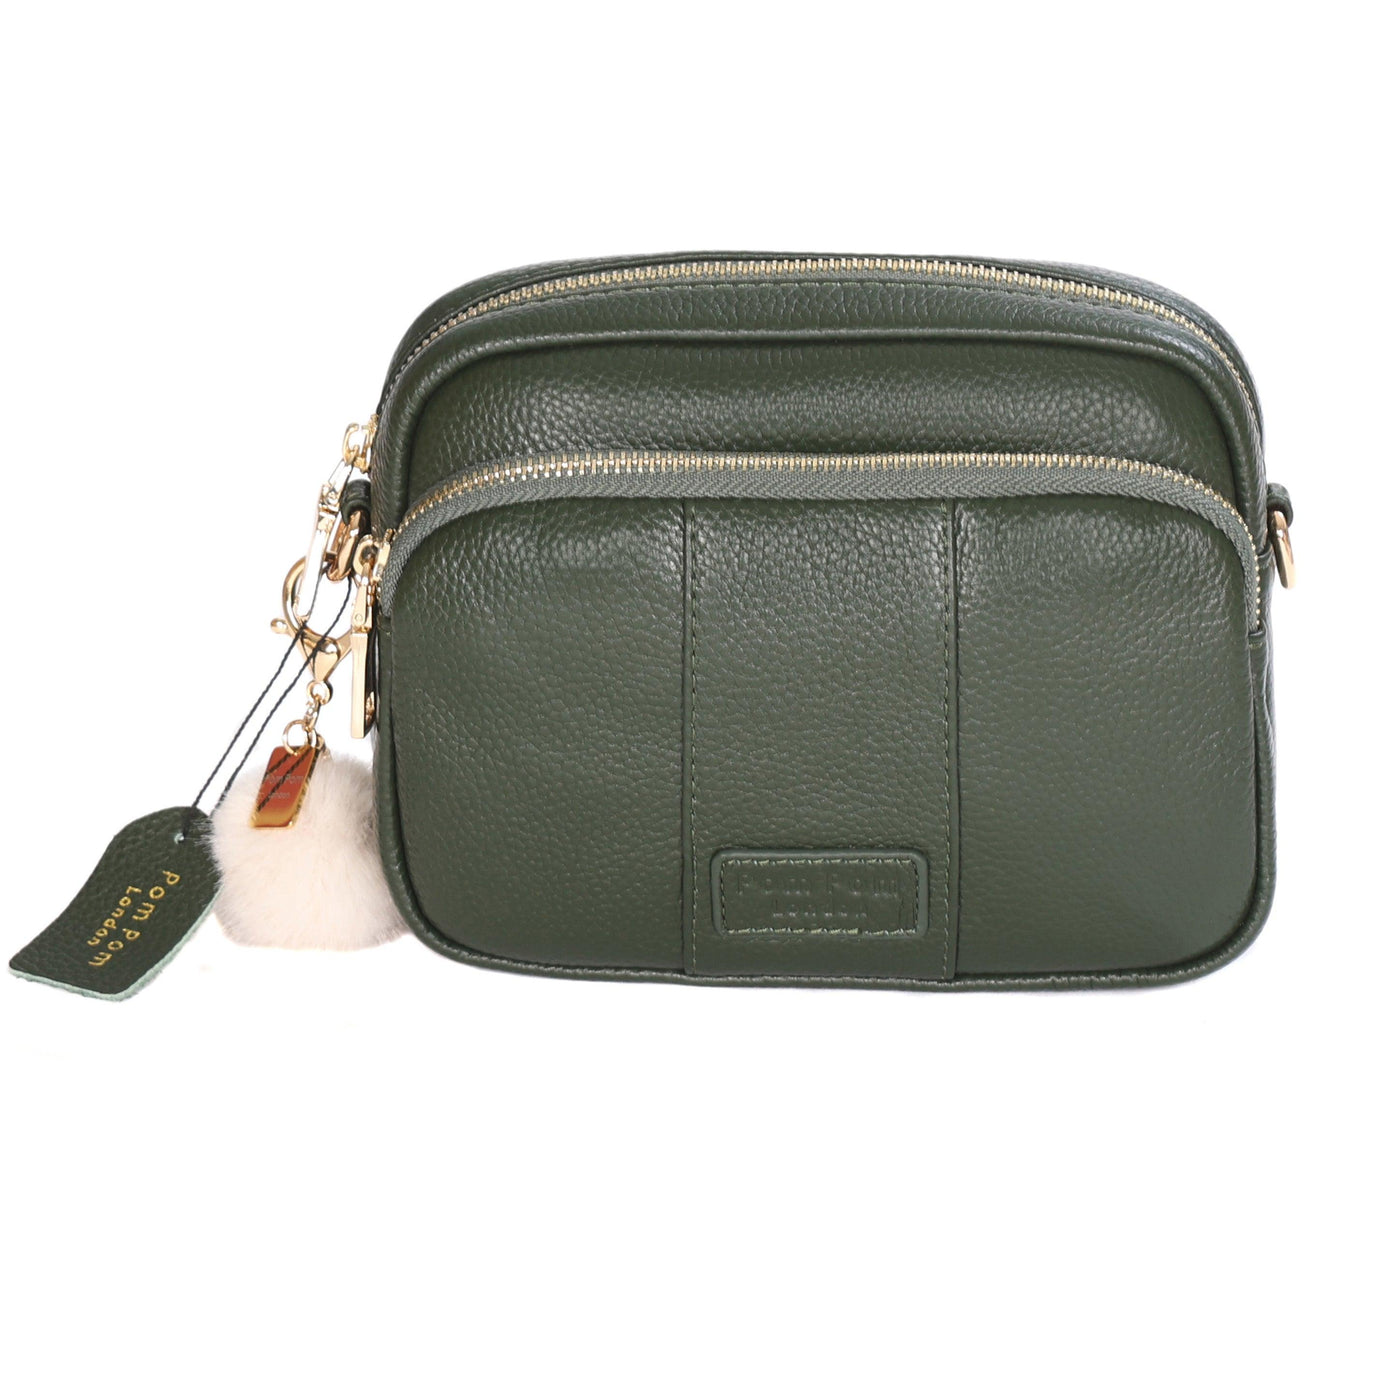 Mayfair Bag Vintage Green & Accessories